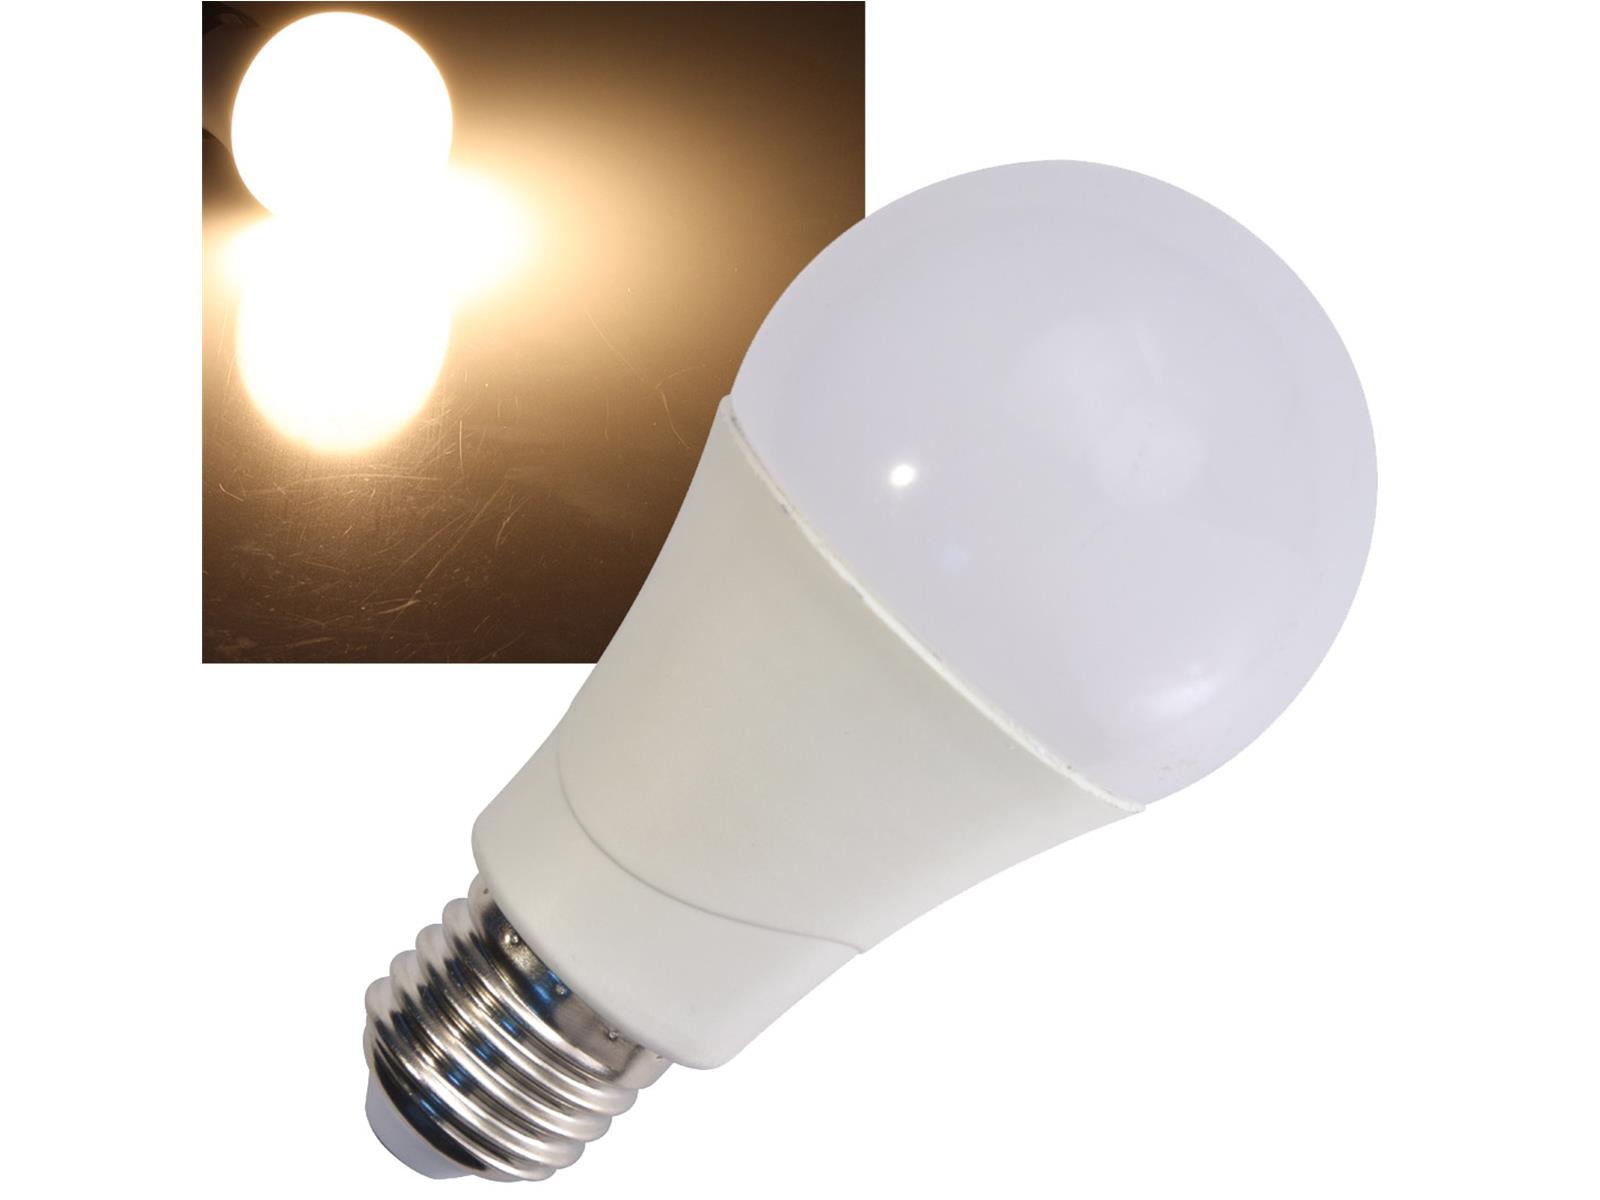 LED Glühlampe E27 "G90 AGL" warmweiß3000k, 1500lm, 230V/15W, 160°